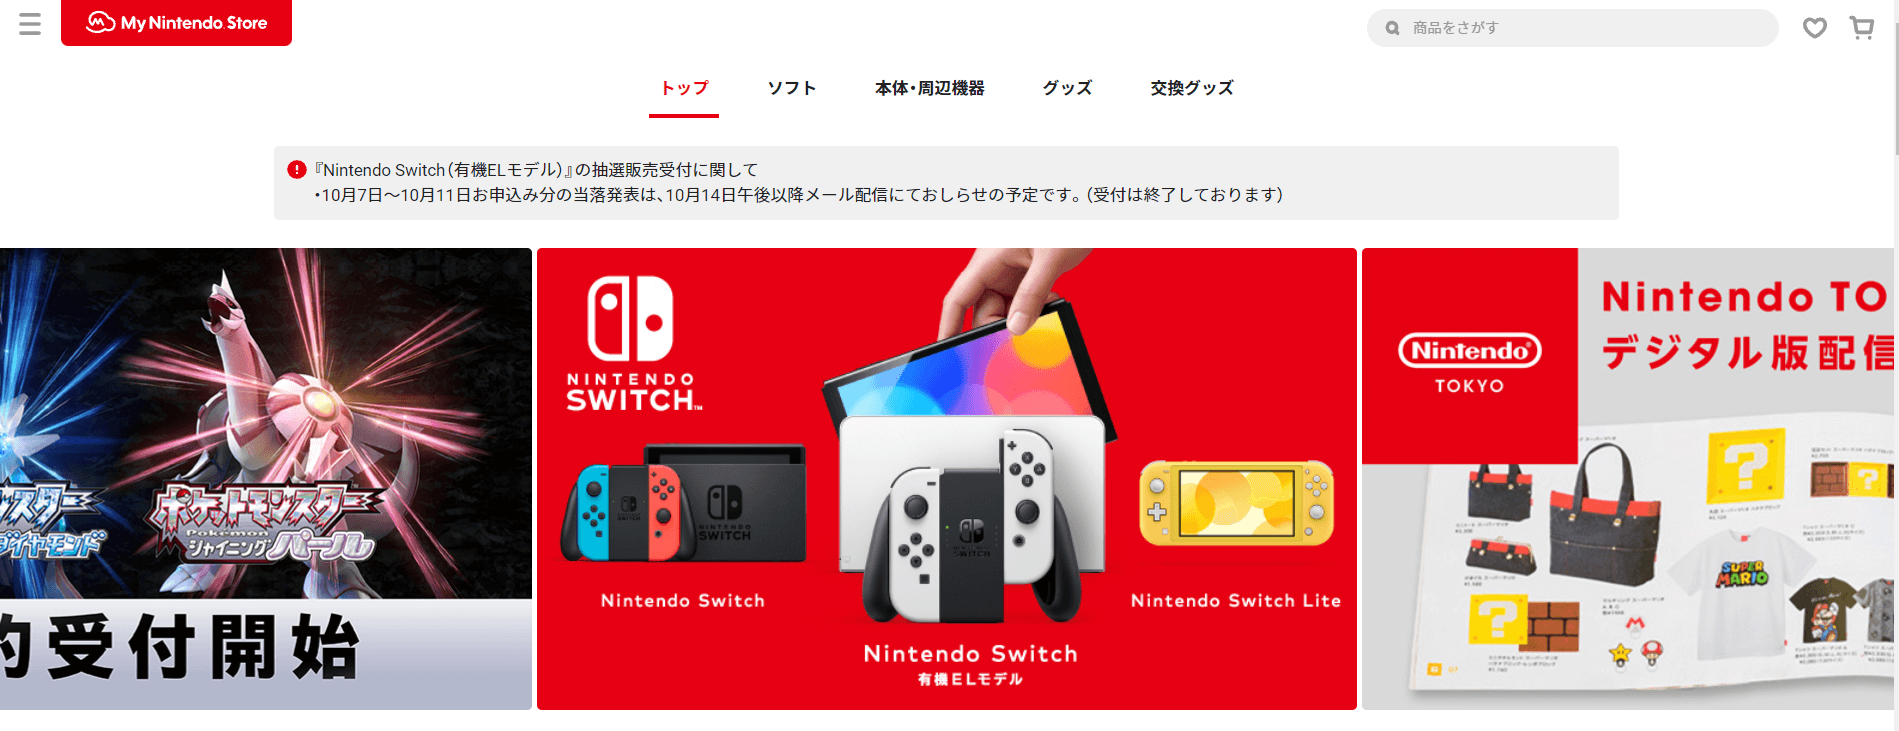 How to buy from Nintendo Store Japan - Nintendo Homepage